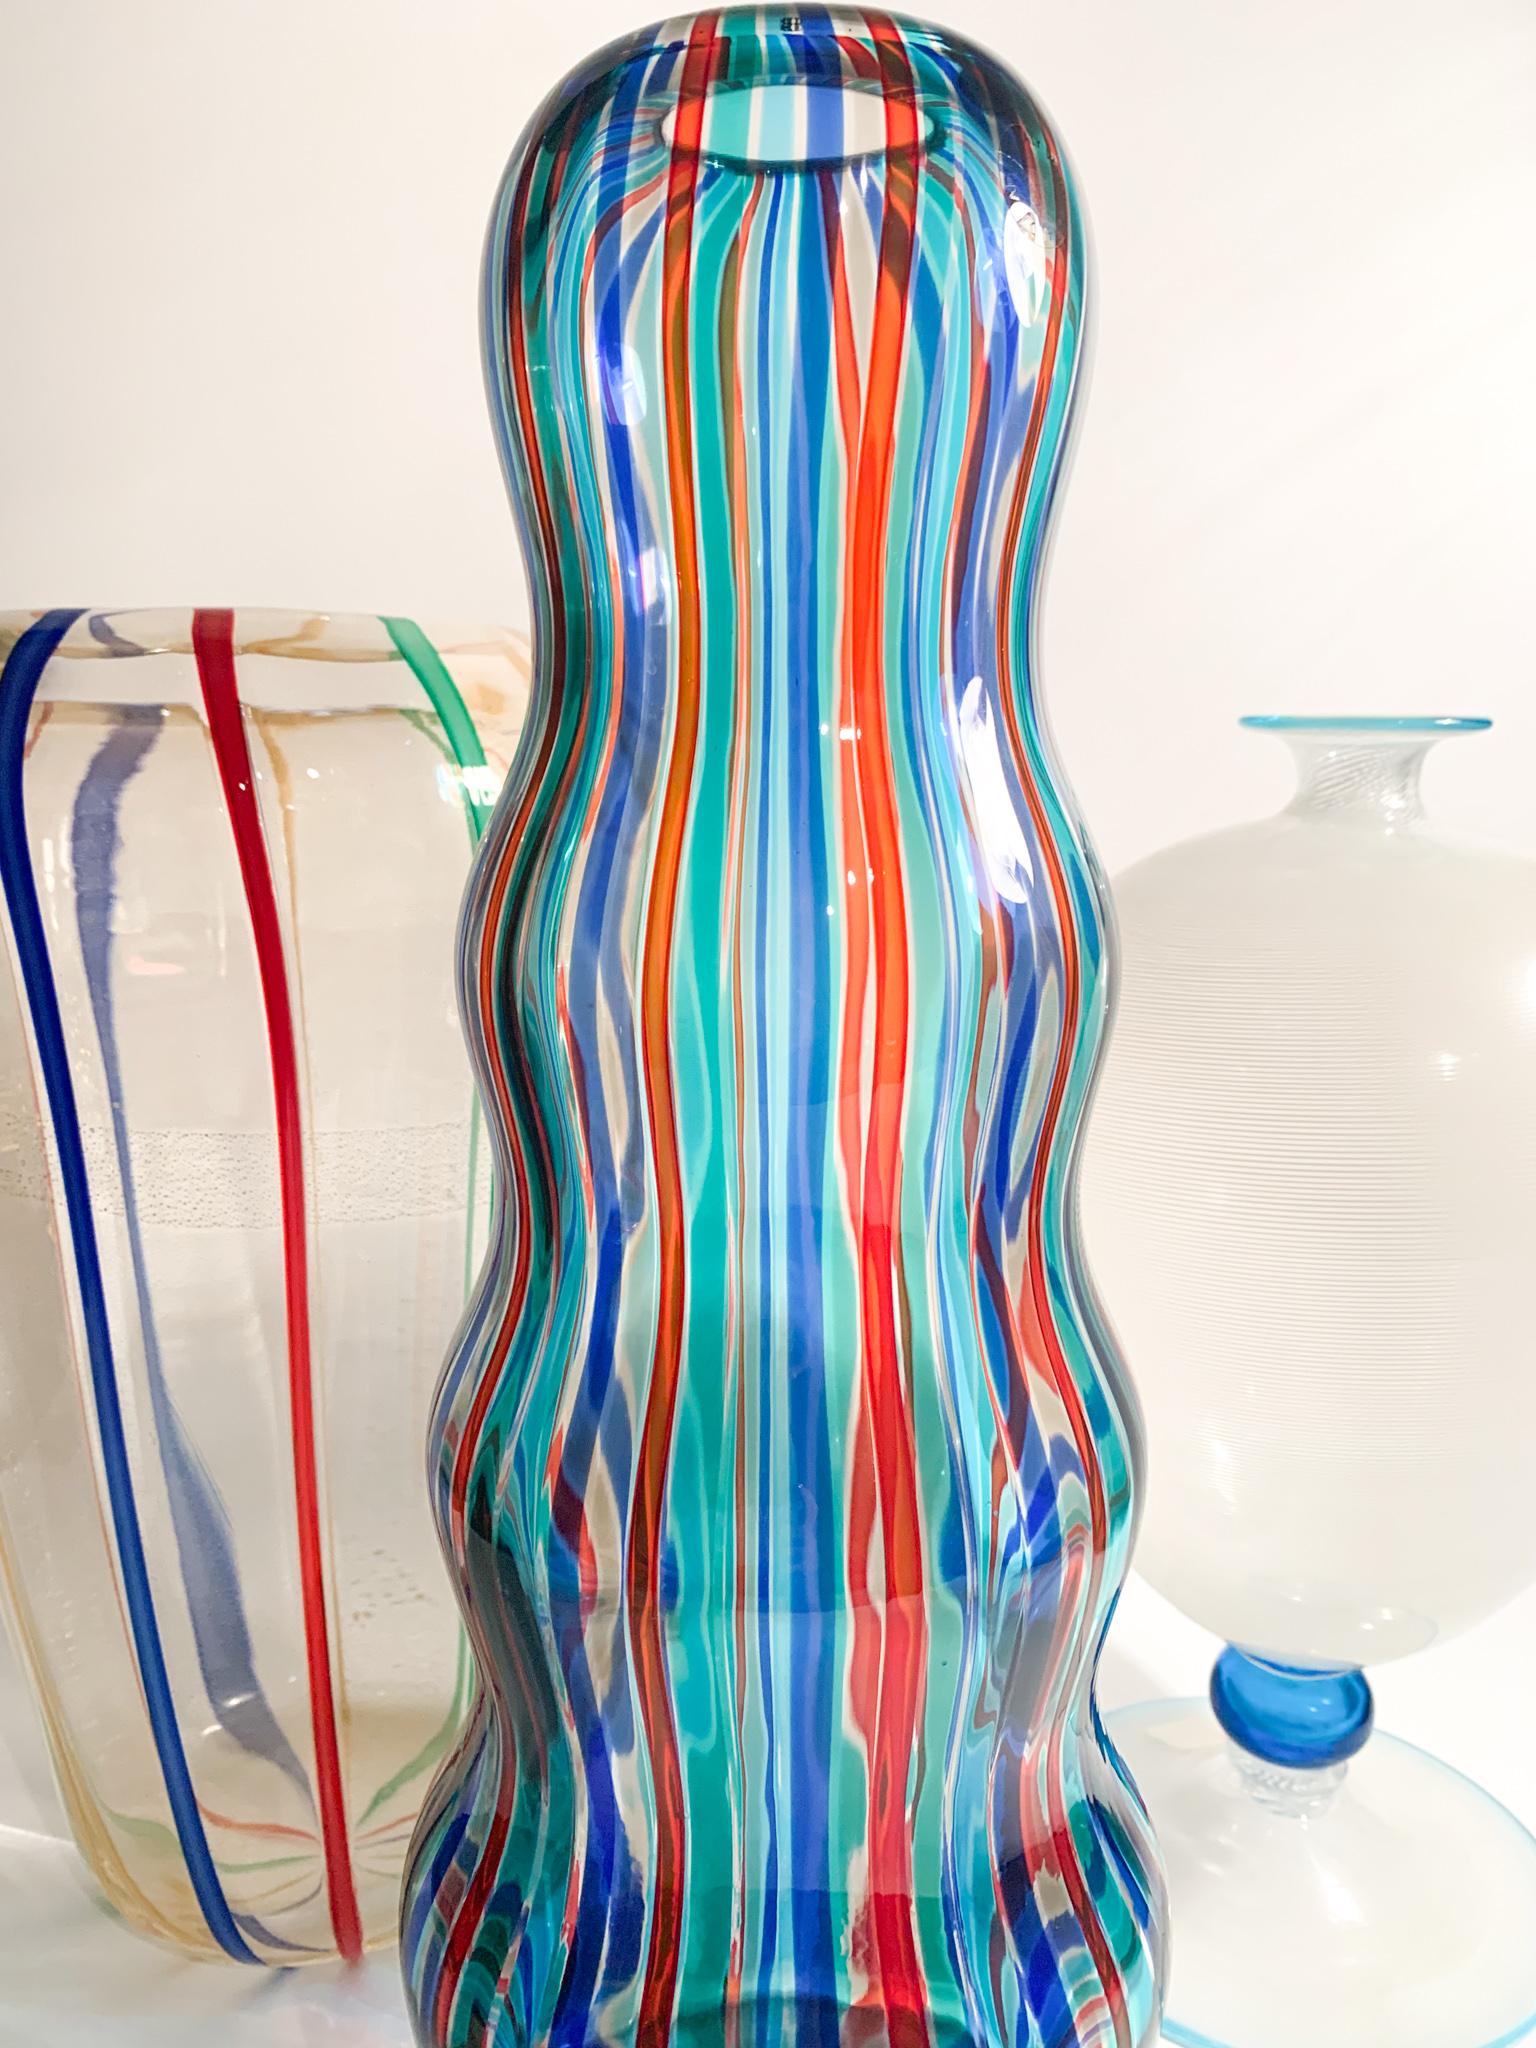 'Arado' Vase by Alessandro Mendini for Venini from 1988 For Sale 11